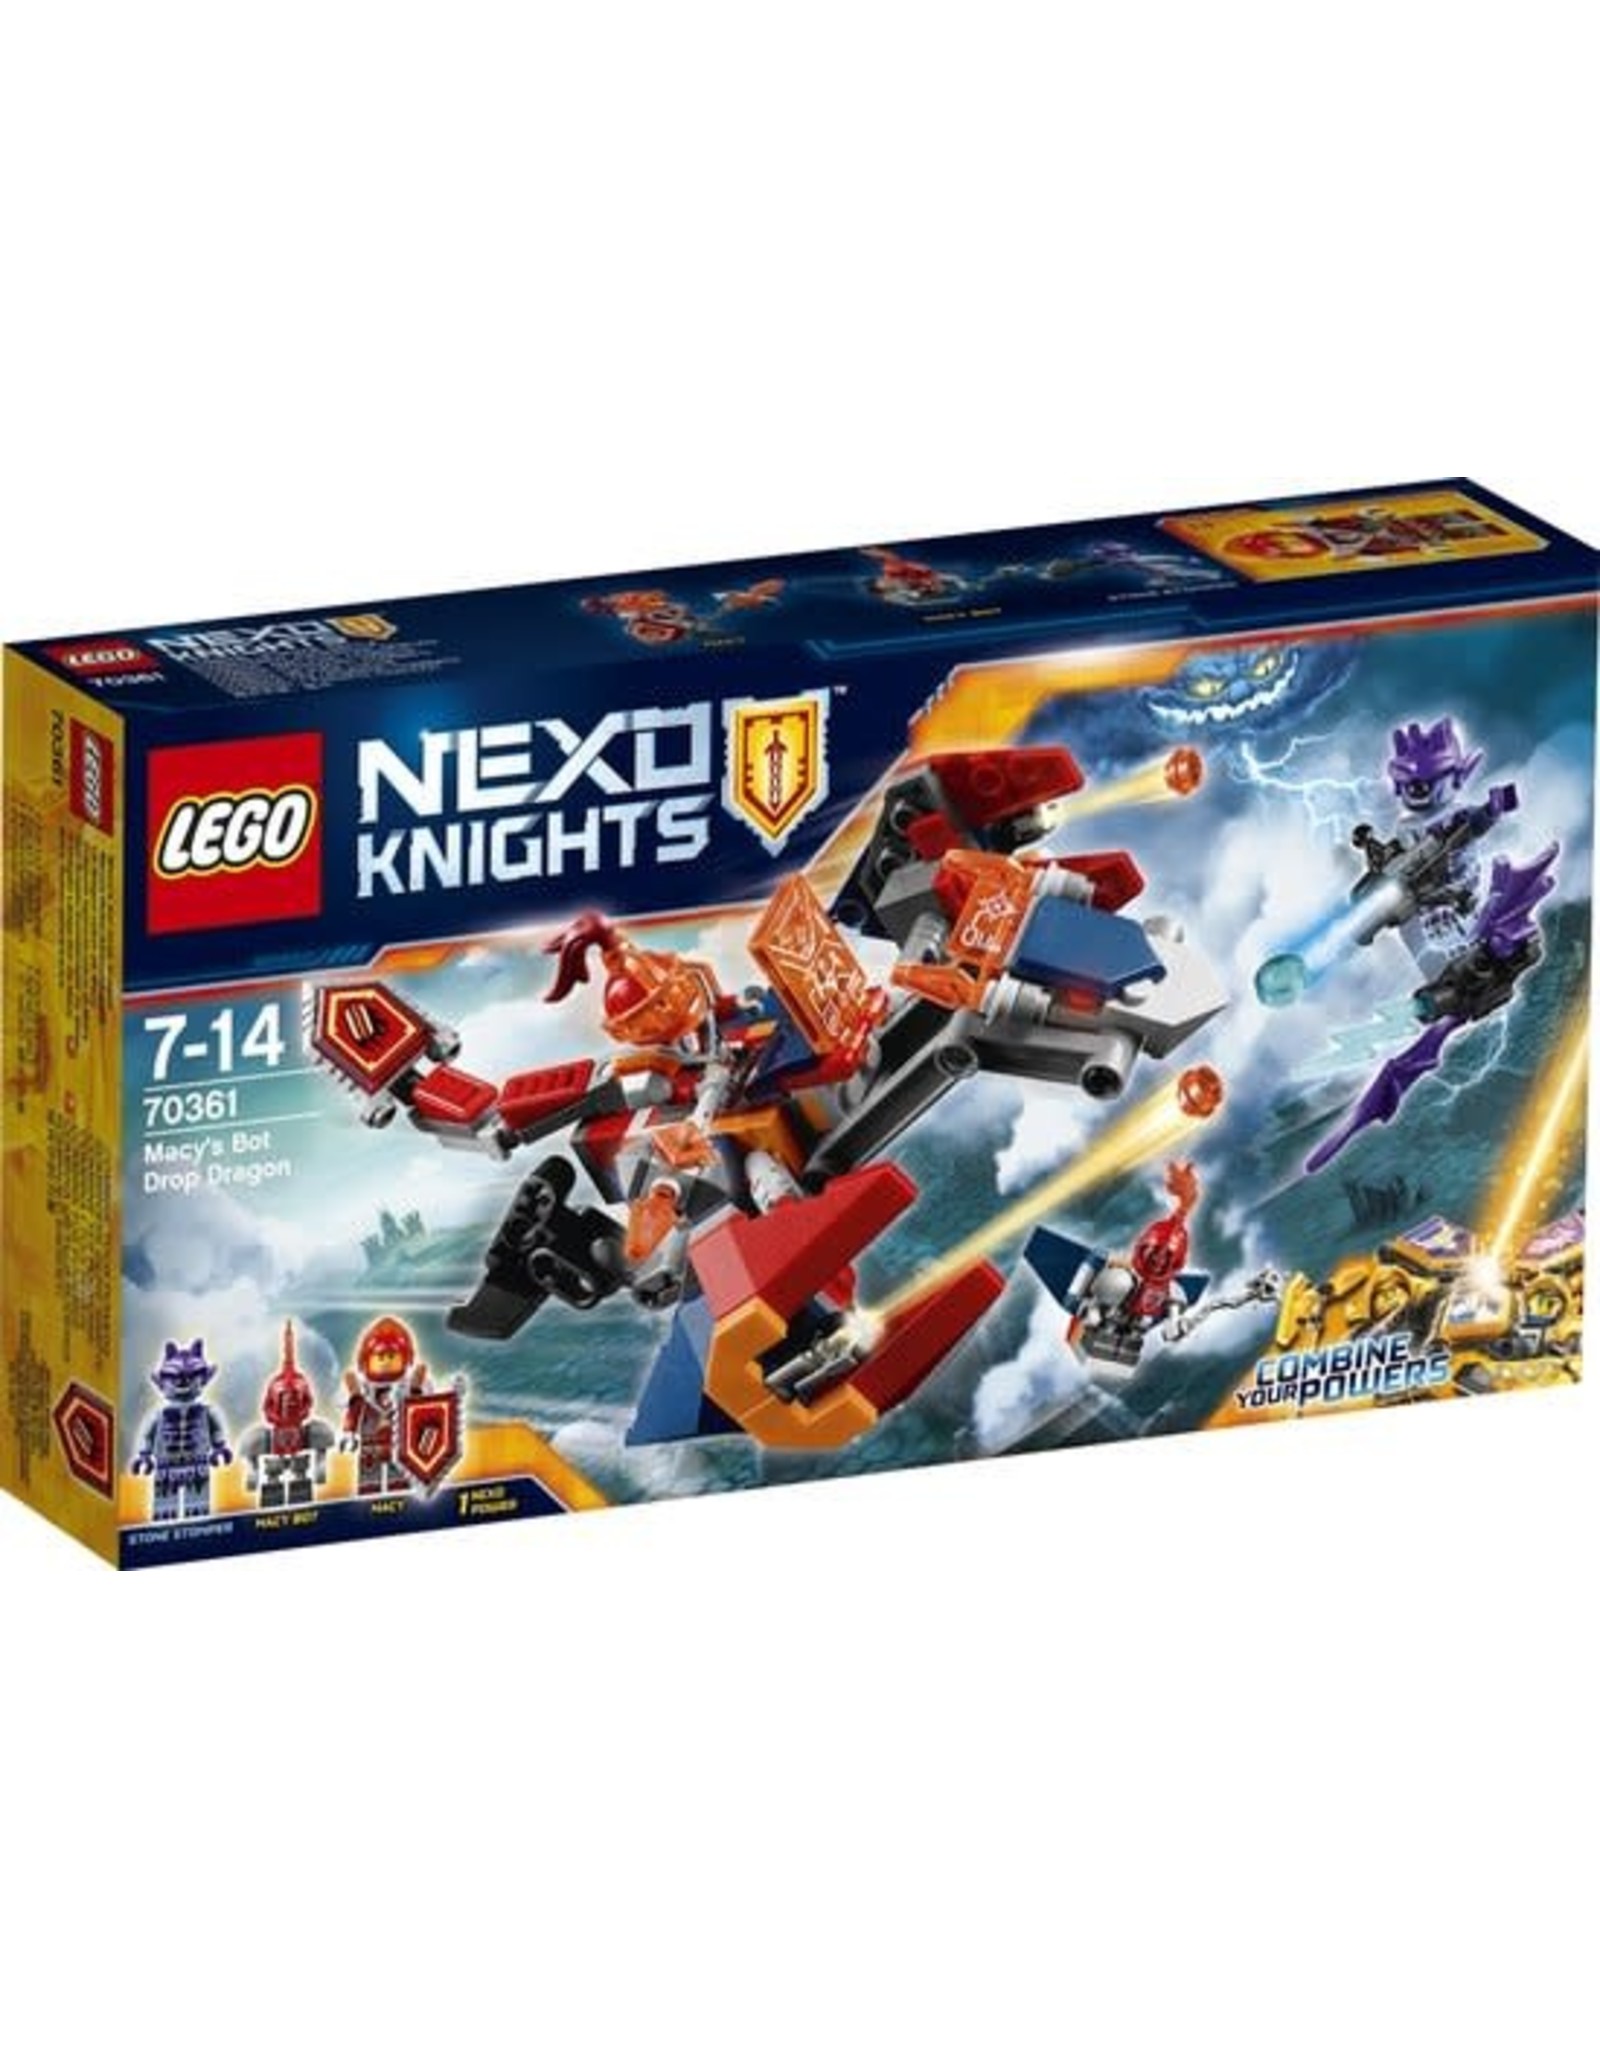 LEGO Lego Nexo Knights 70361 Macy's Bot Drop Draak -  Macy's Bot Drop Dragon